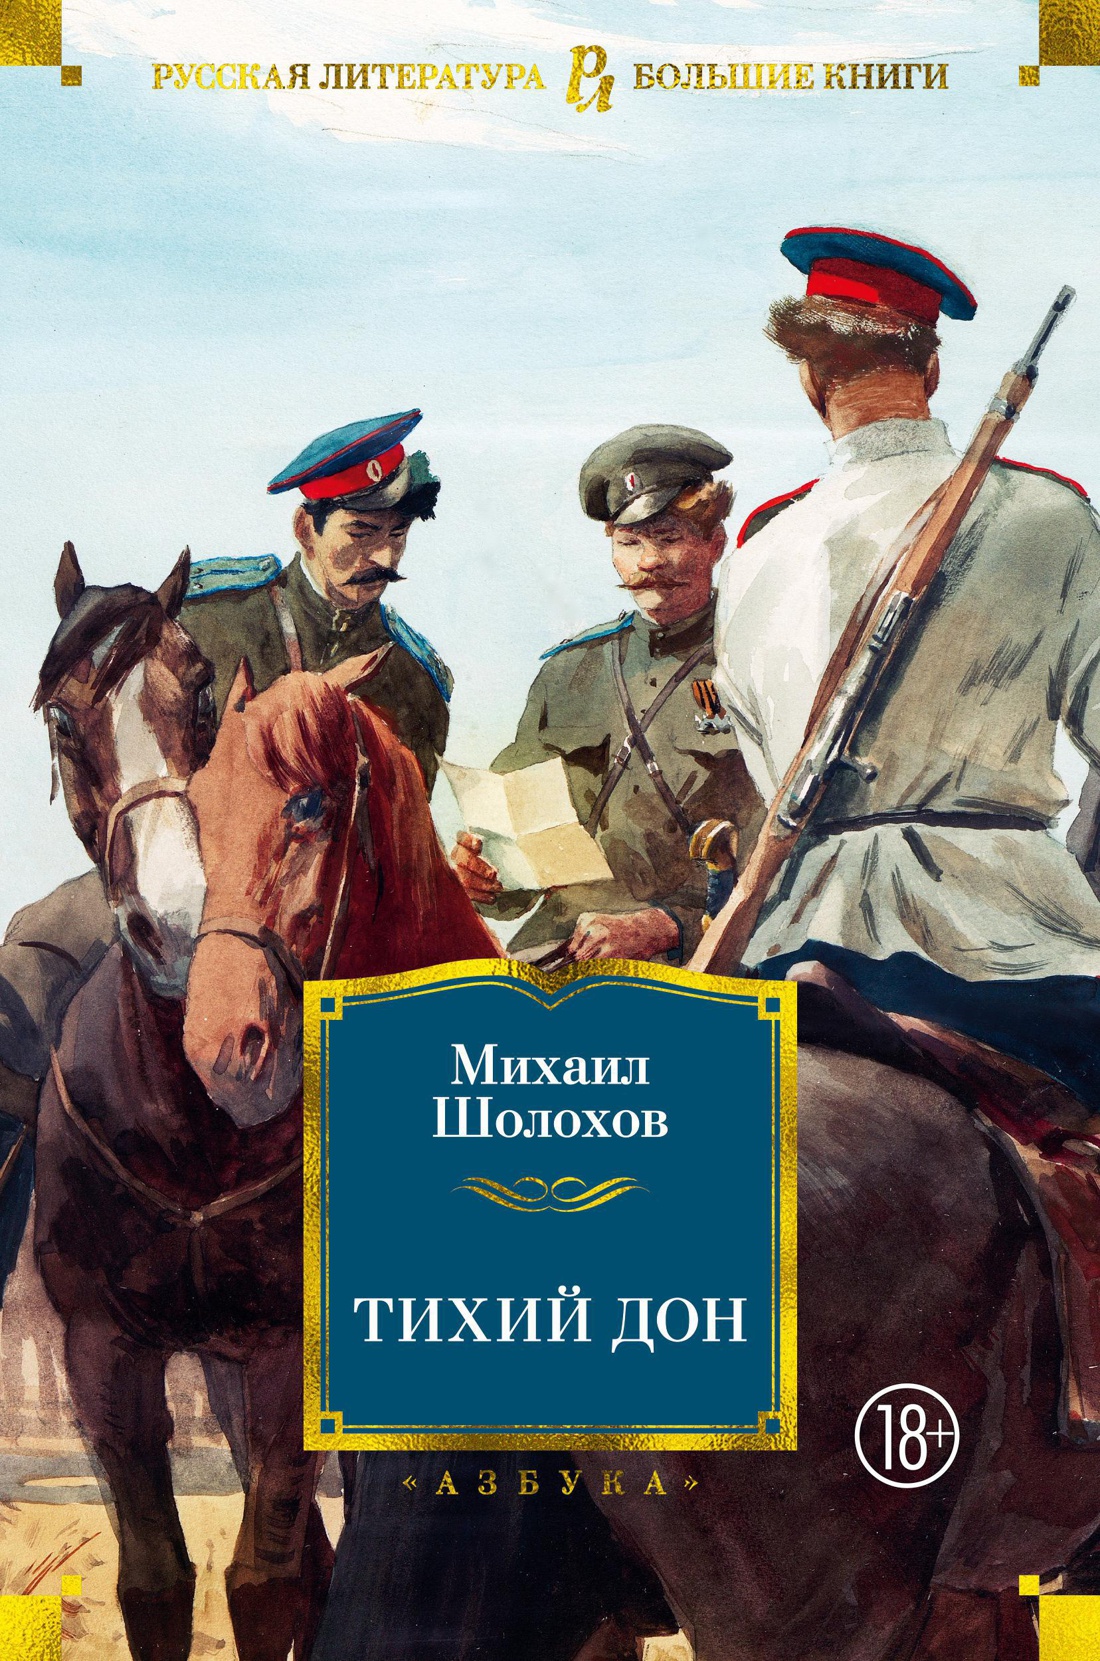 «Тихий Дон» - роман-эпопея Михаила Александровича Шолохова